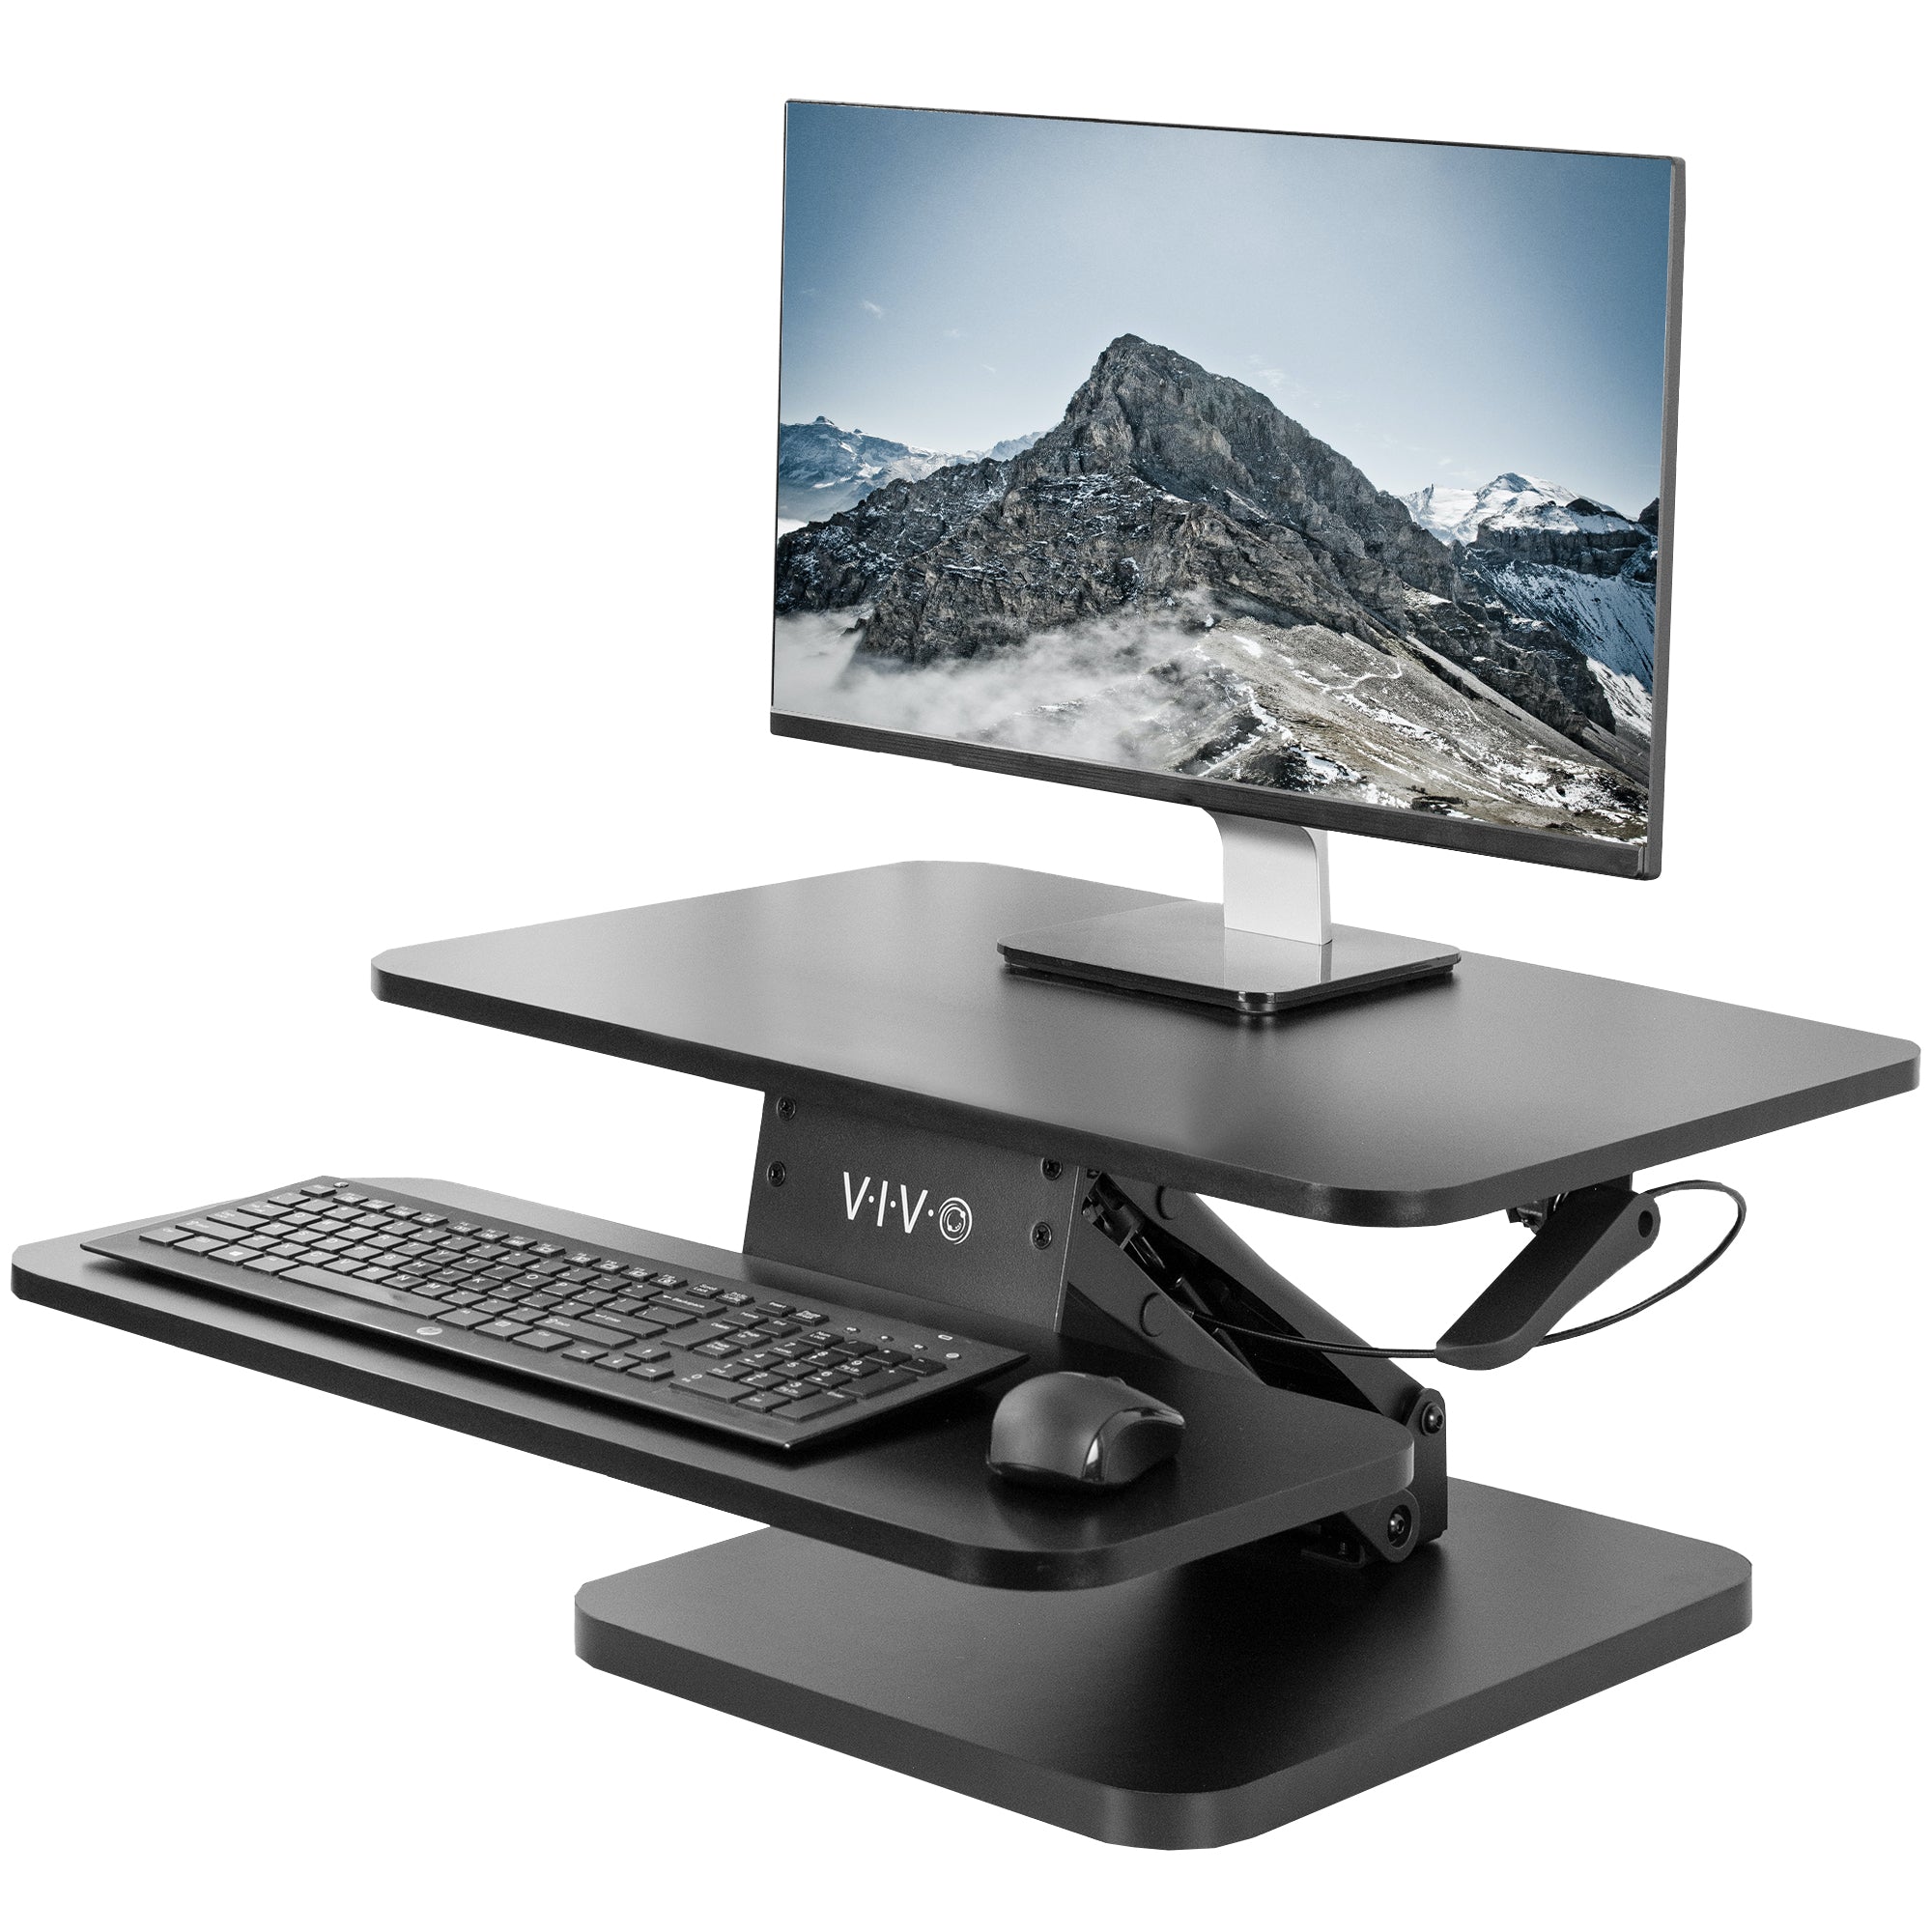 Ergonomic Desks - Sit-Stand Desks & Converters